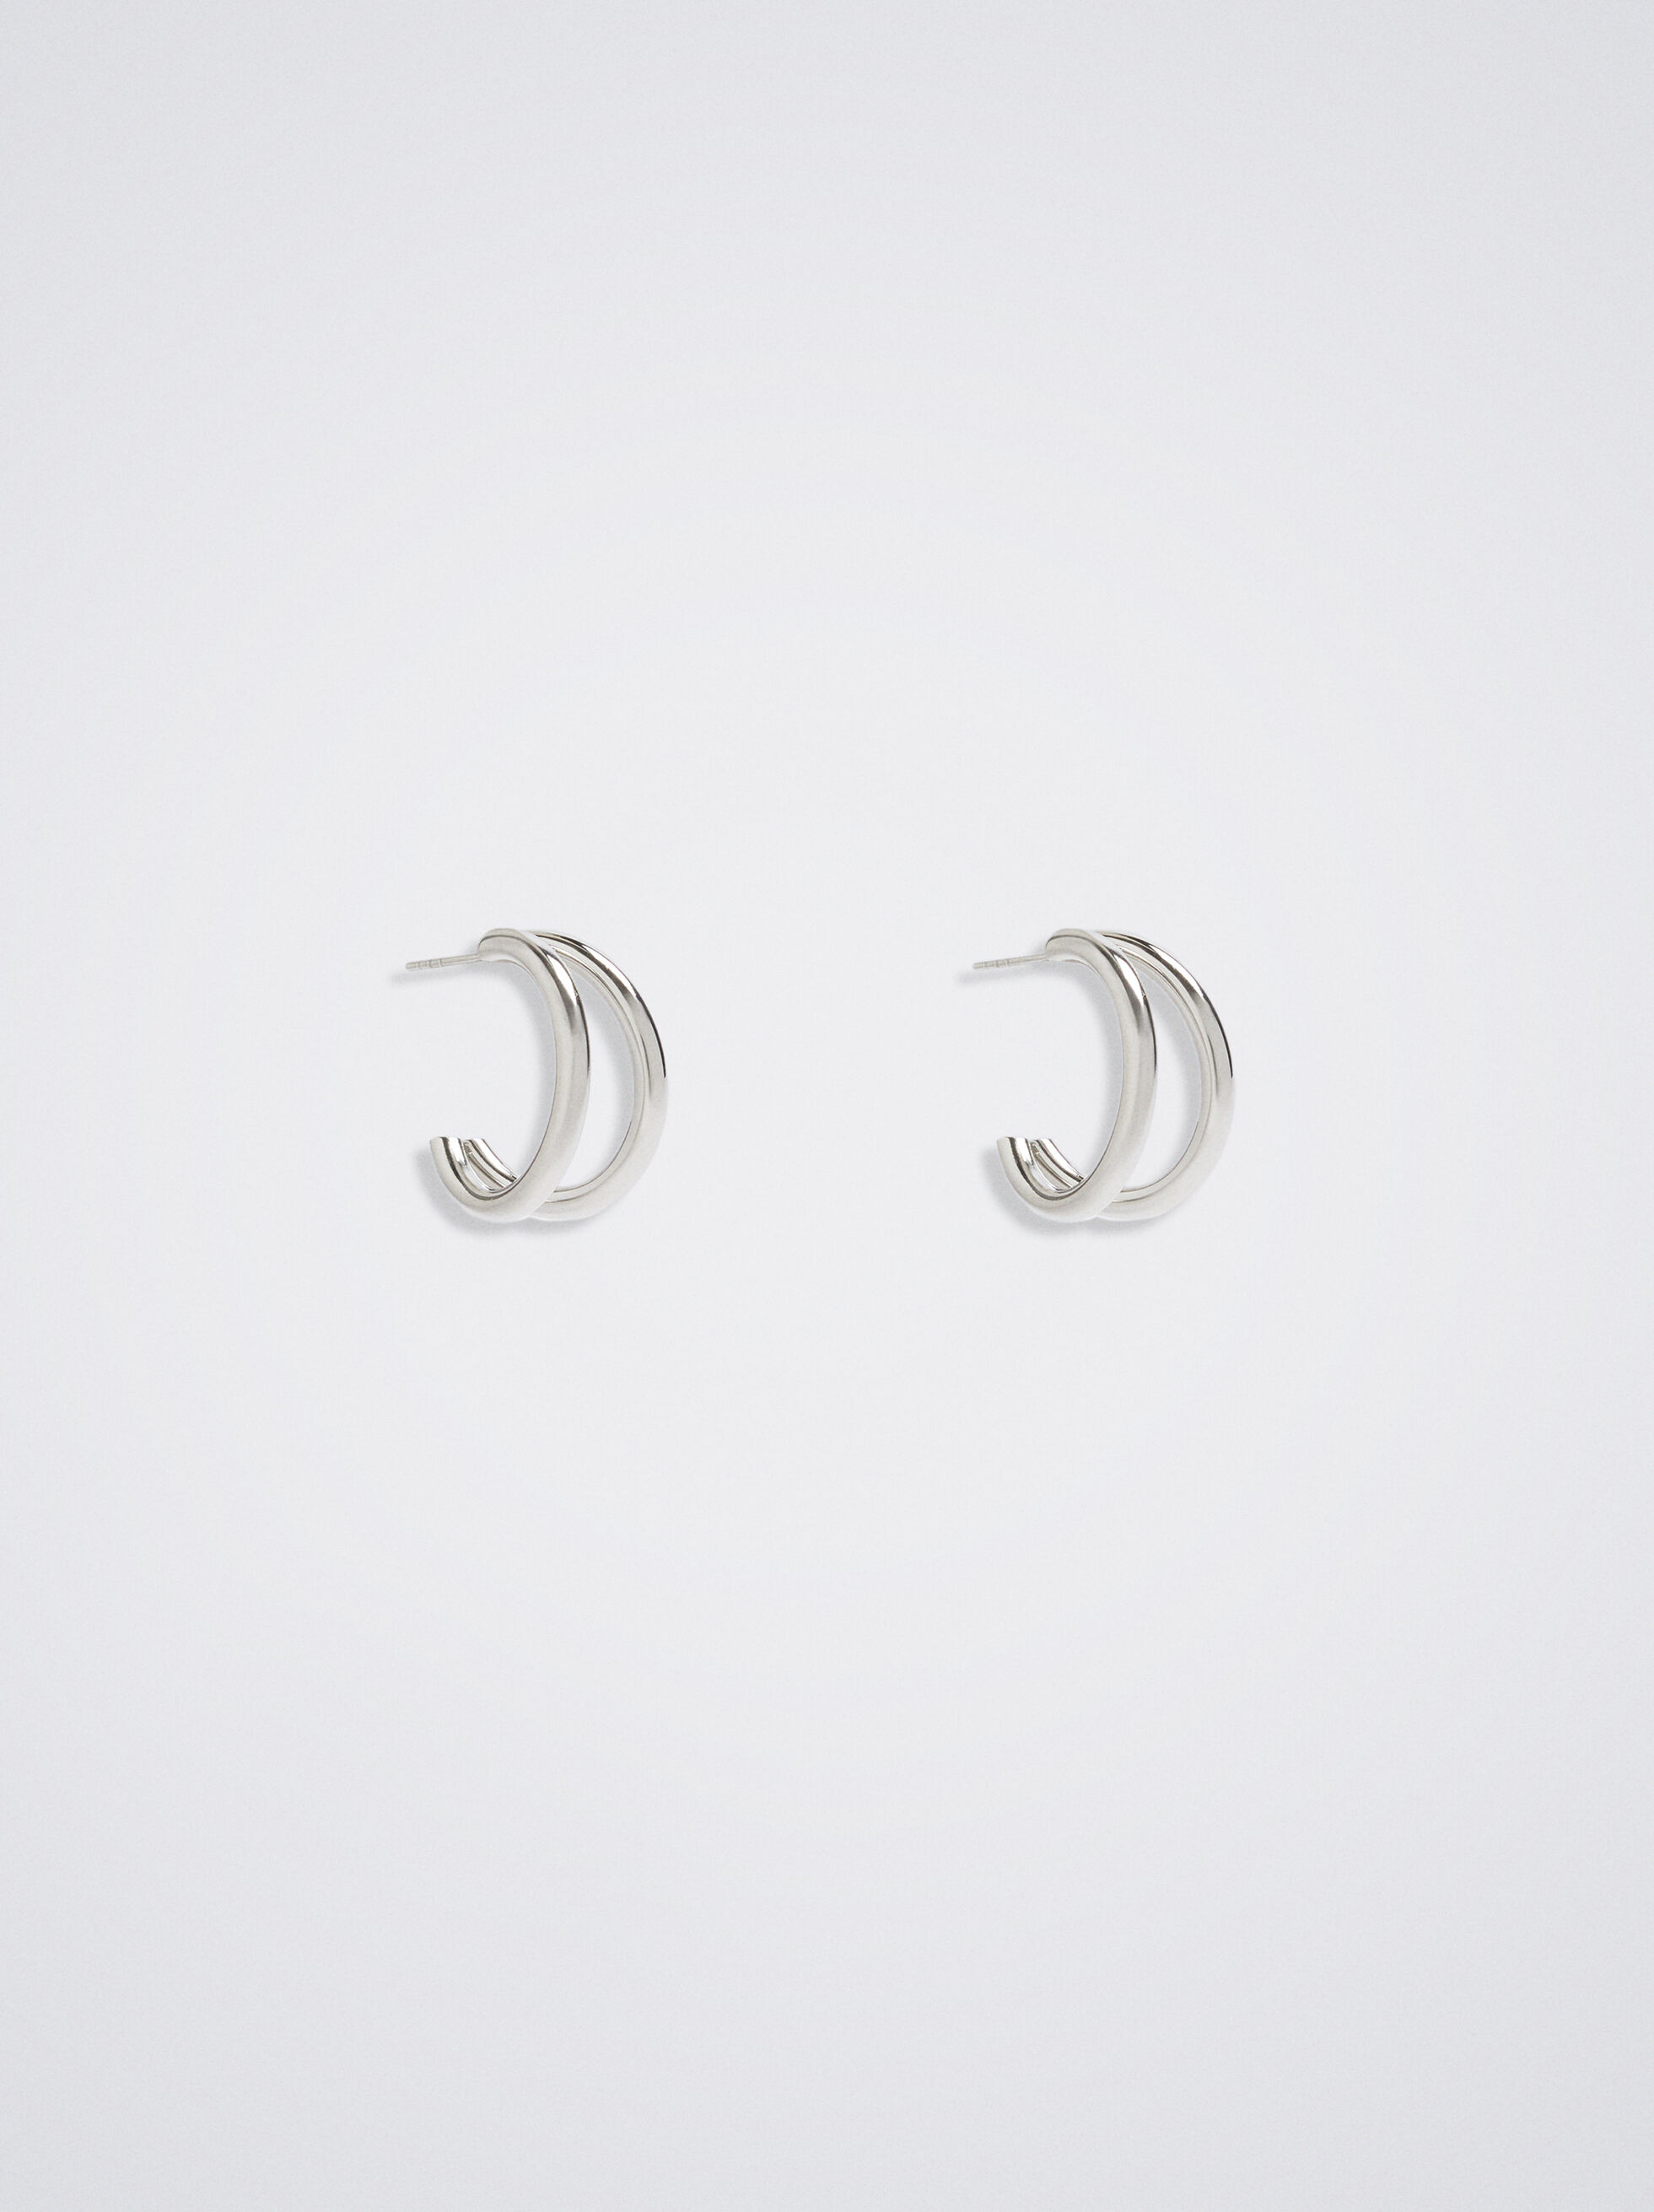 ChicSilver 925 Sterling Silver Polished Hoop Earrings (50mm Diameter) -  Walmart.com